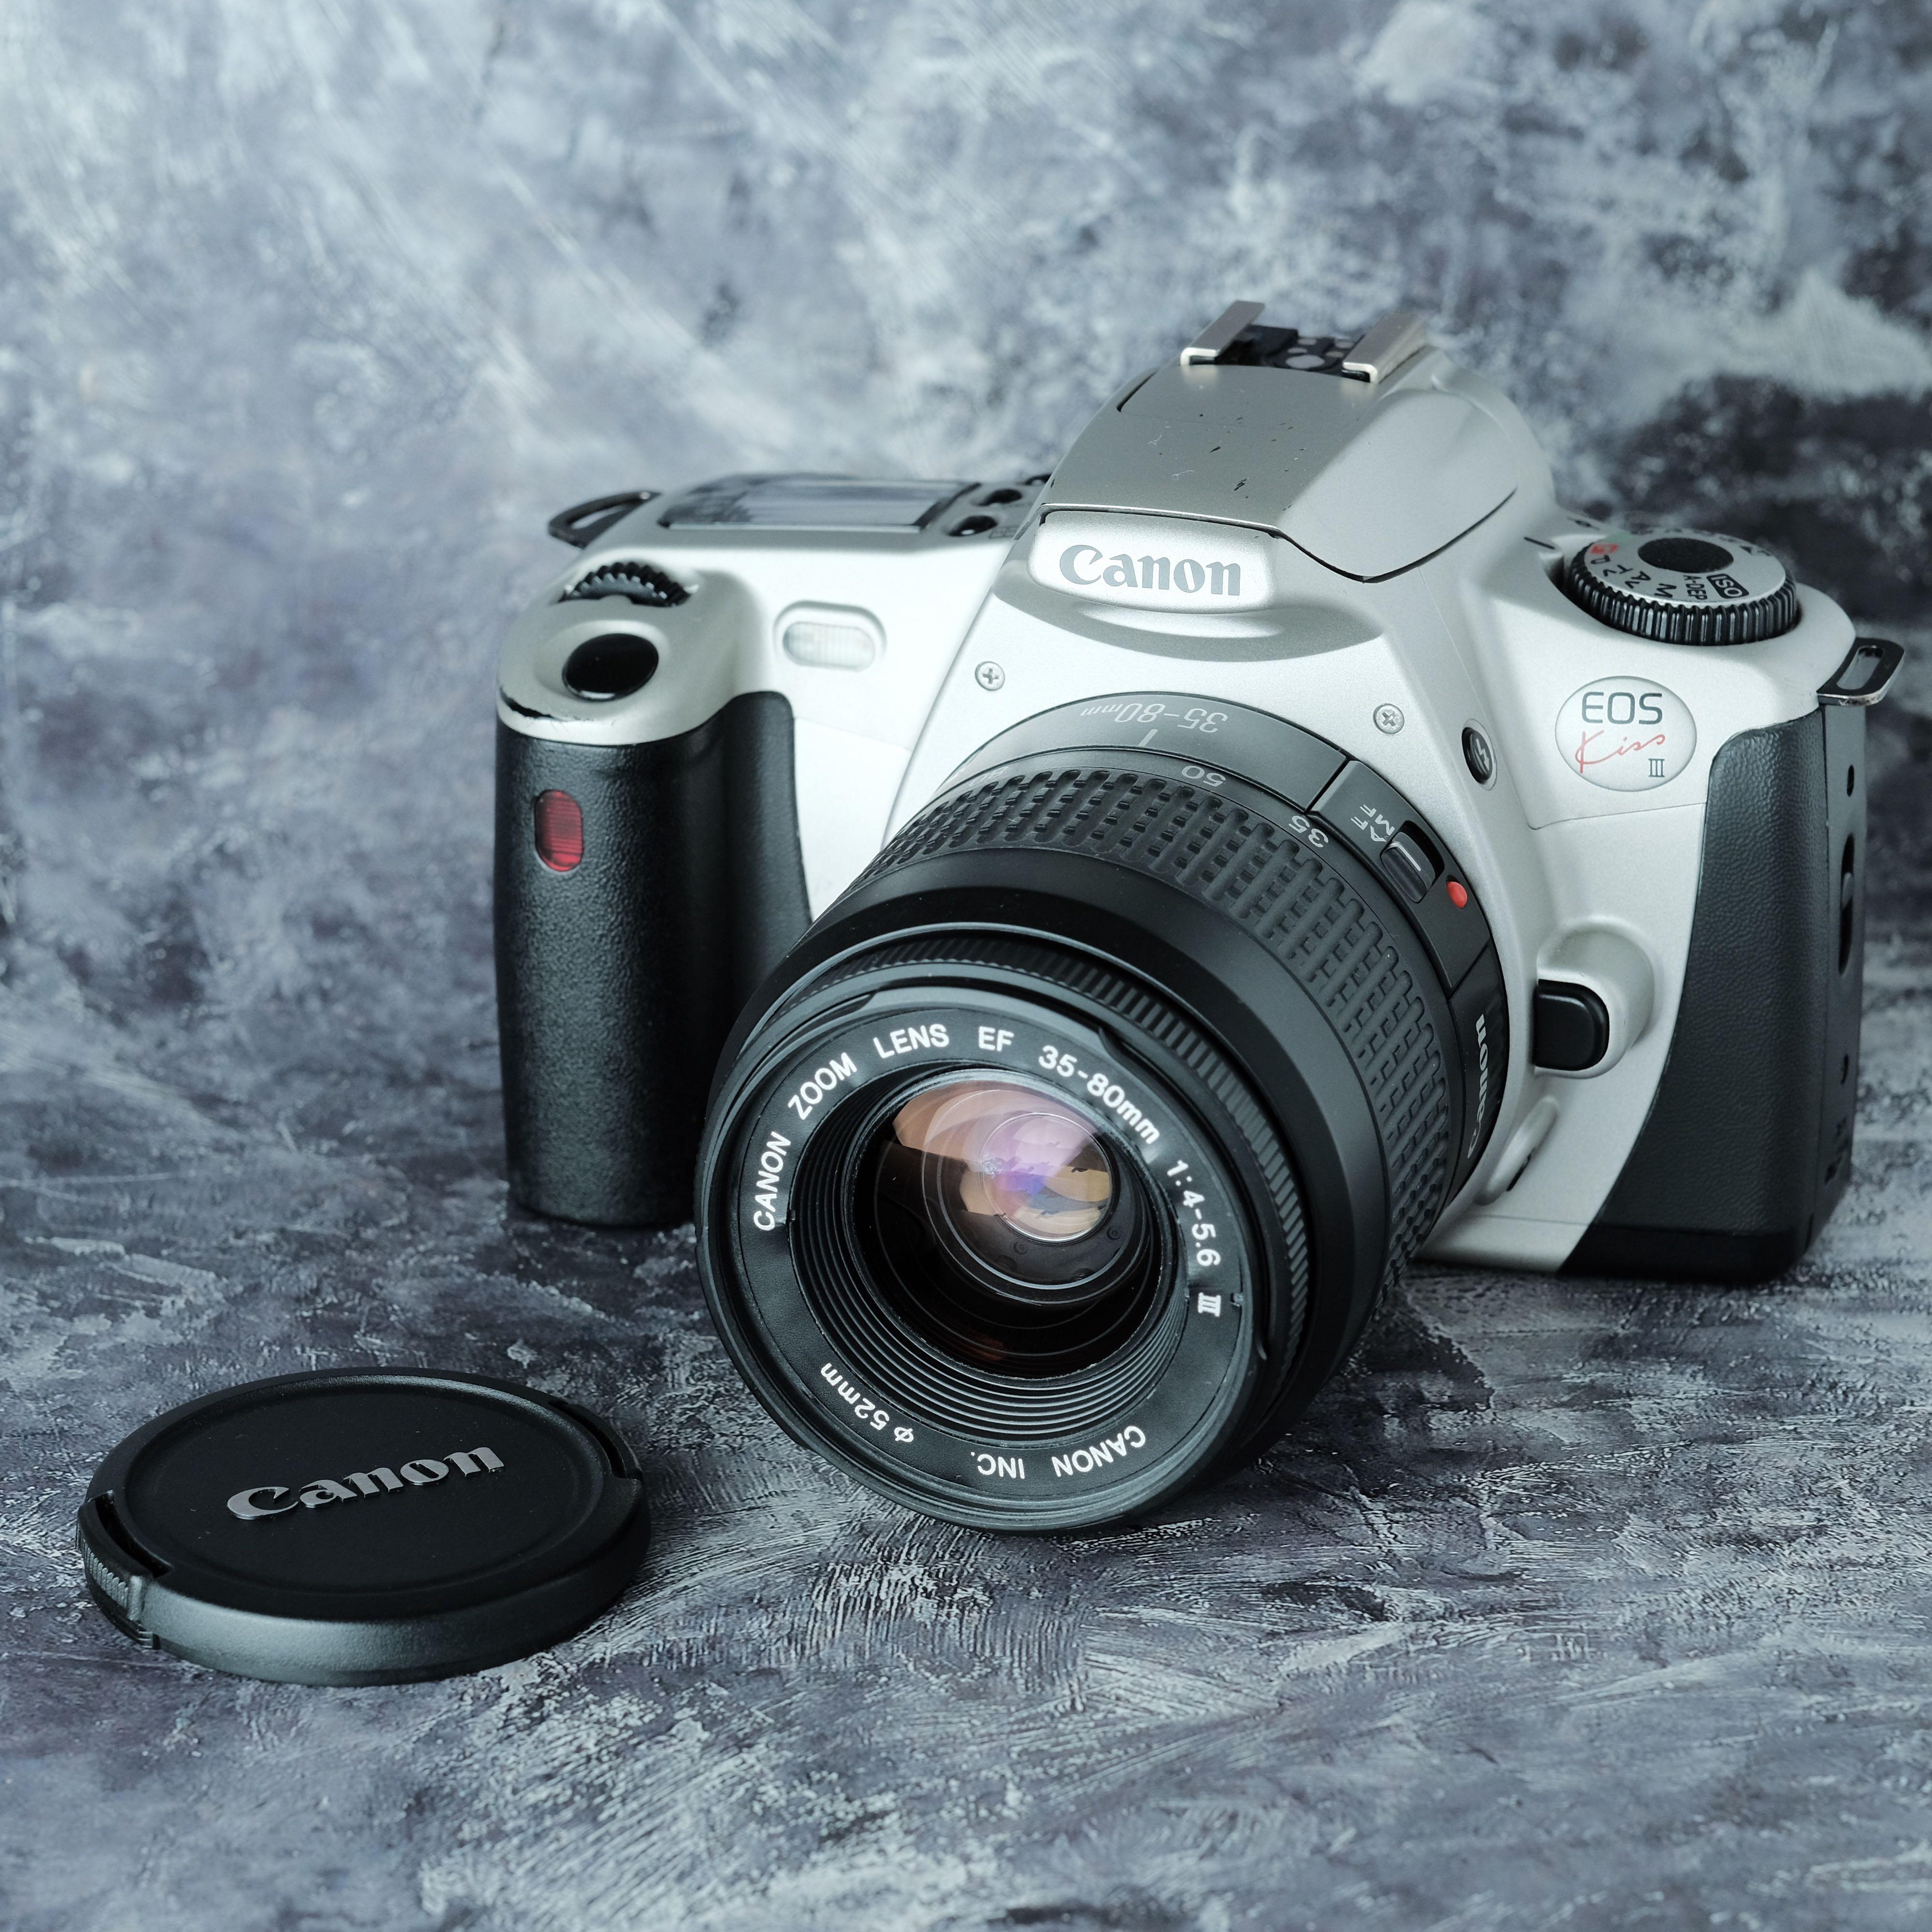 Canon EOS Kiss III 菲林相機連變焦鏡頭, 攝影器材, 鏡頭及裝備